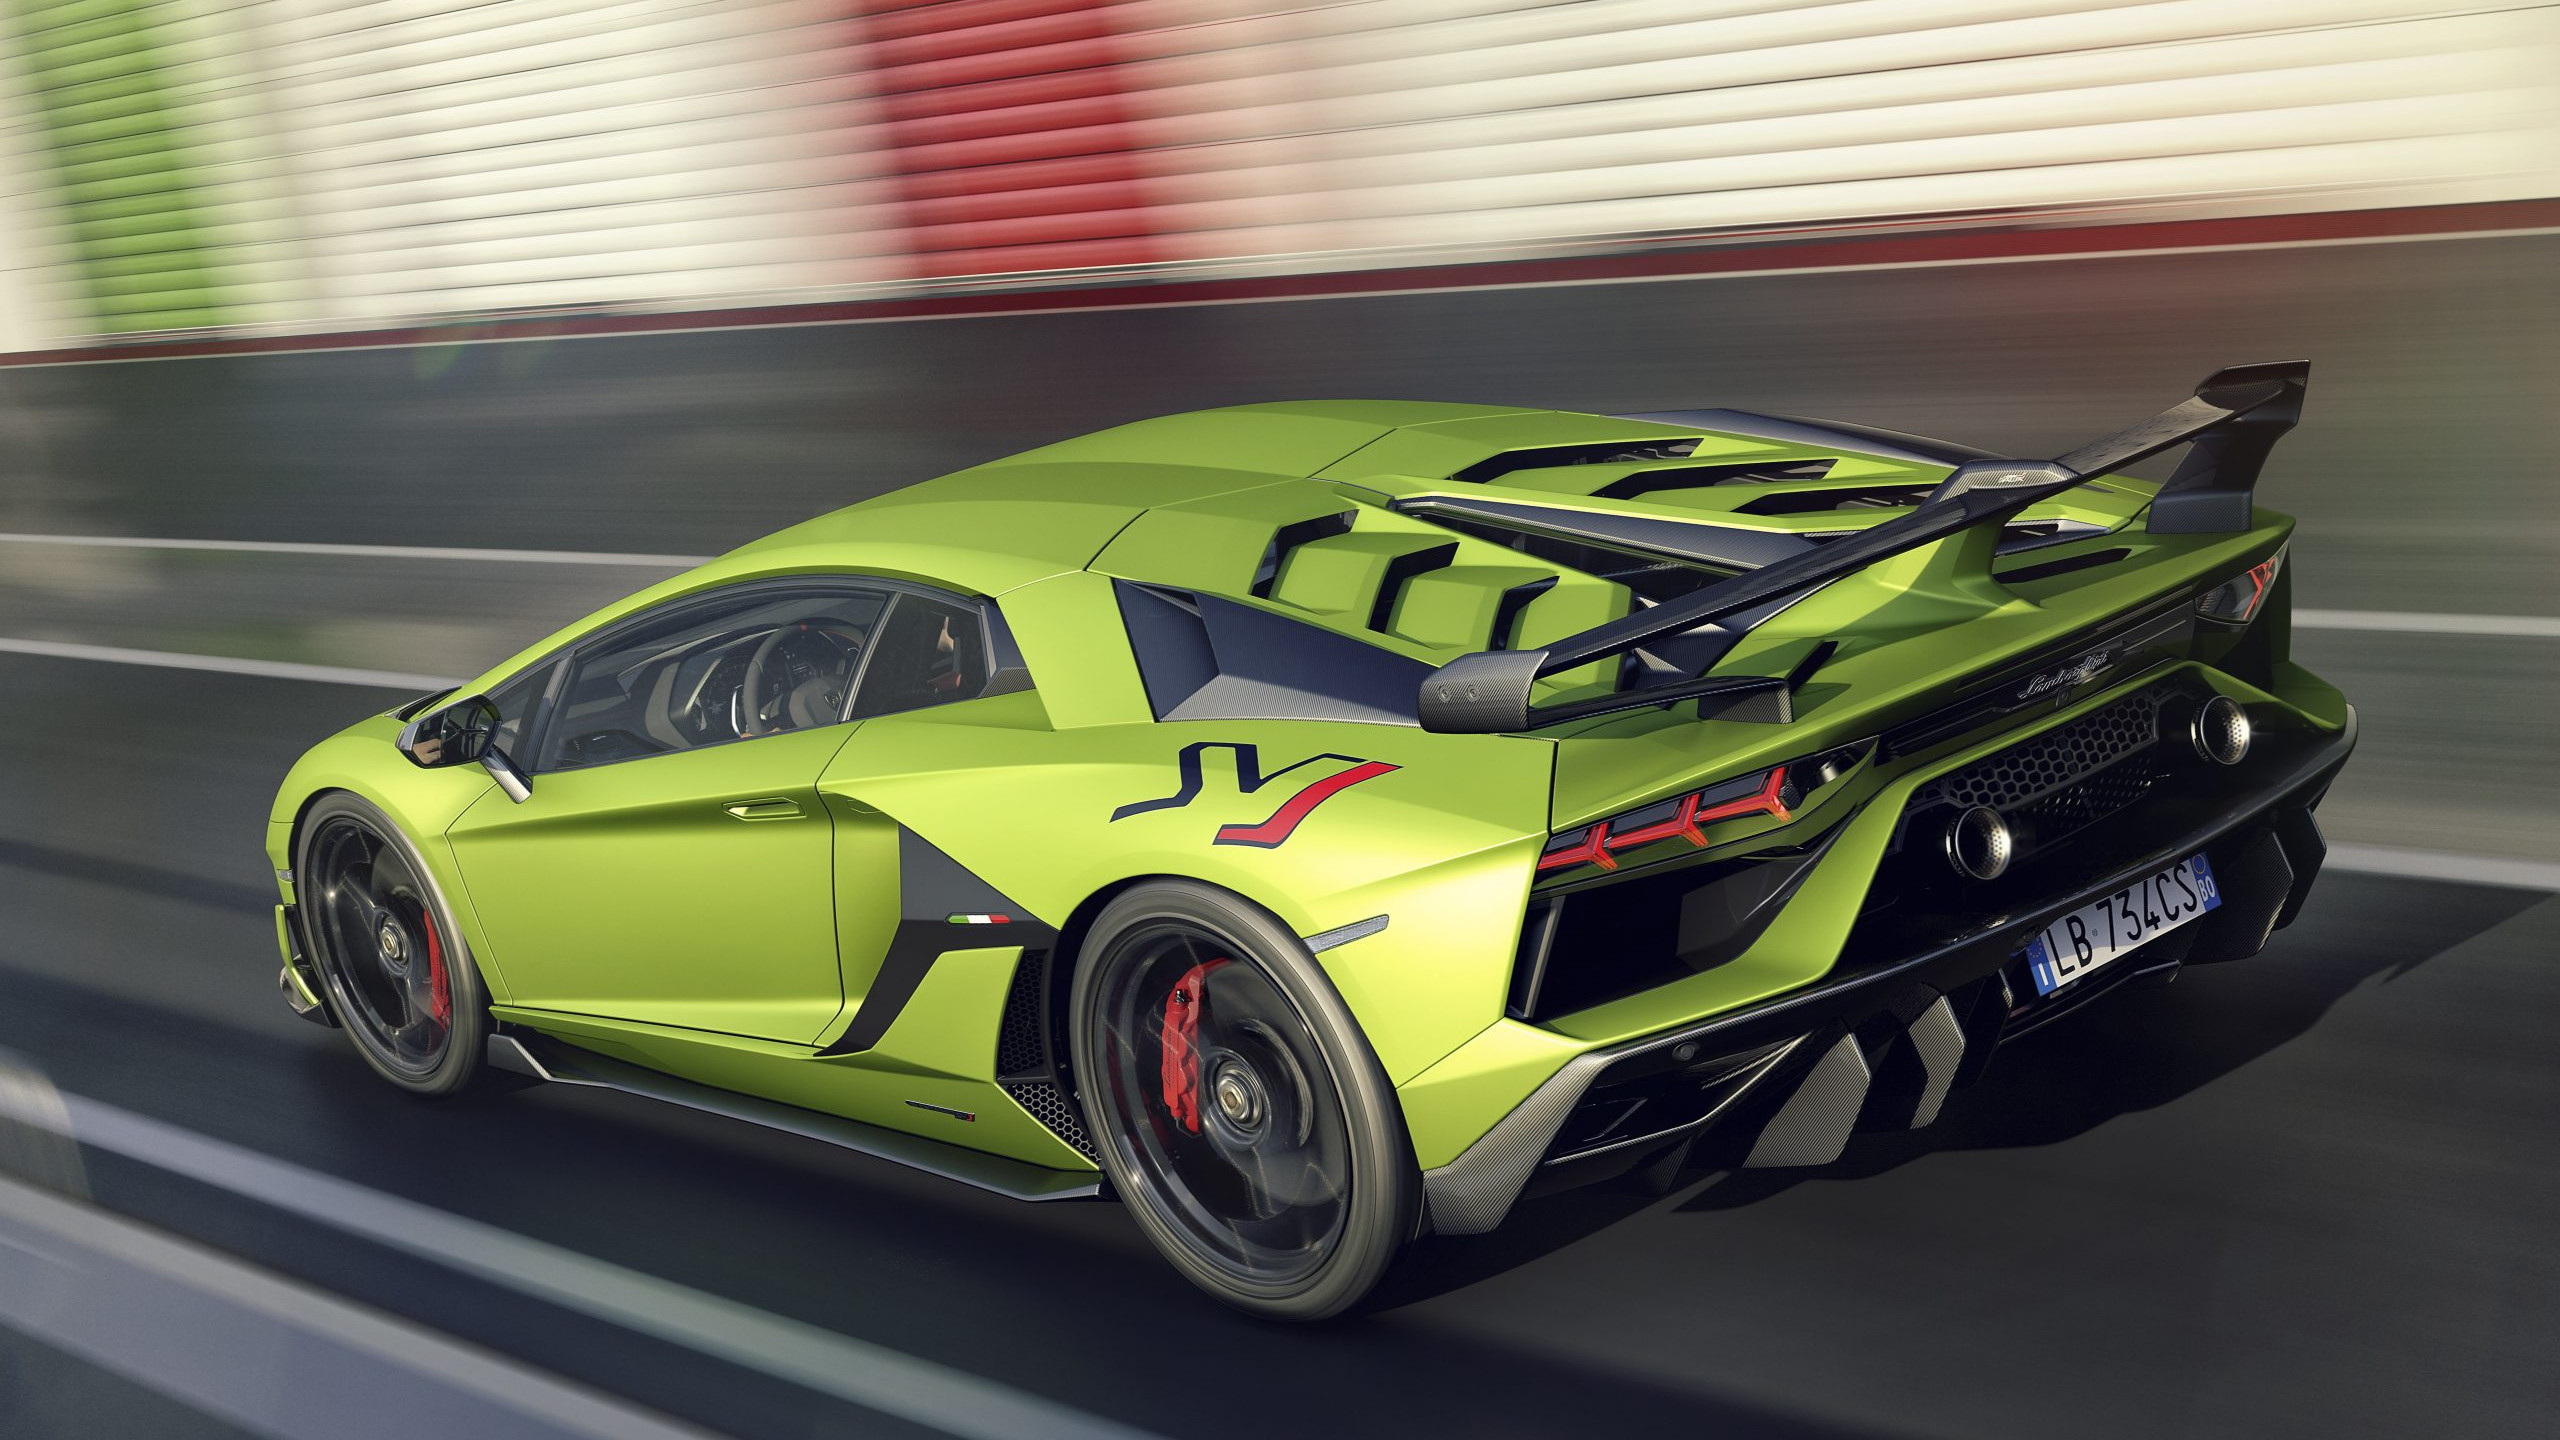 Wallpaper Lamborghini Aventador Svj 2019 Cars Supercar Hd Cars